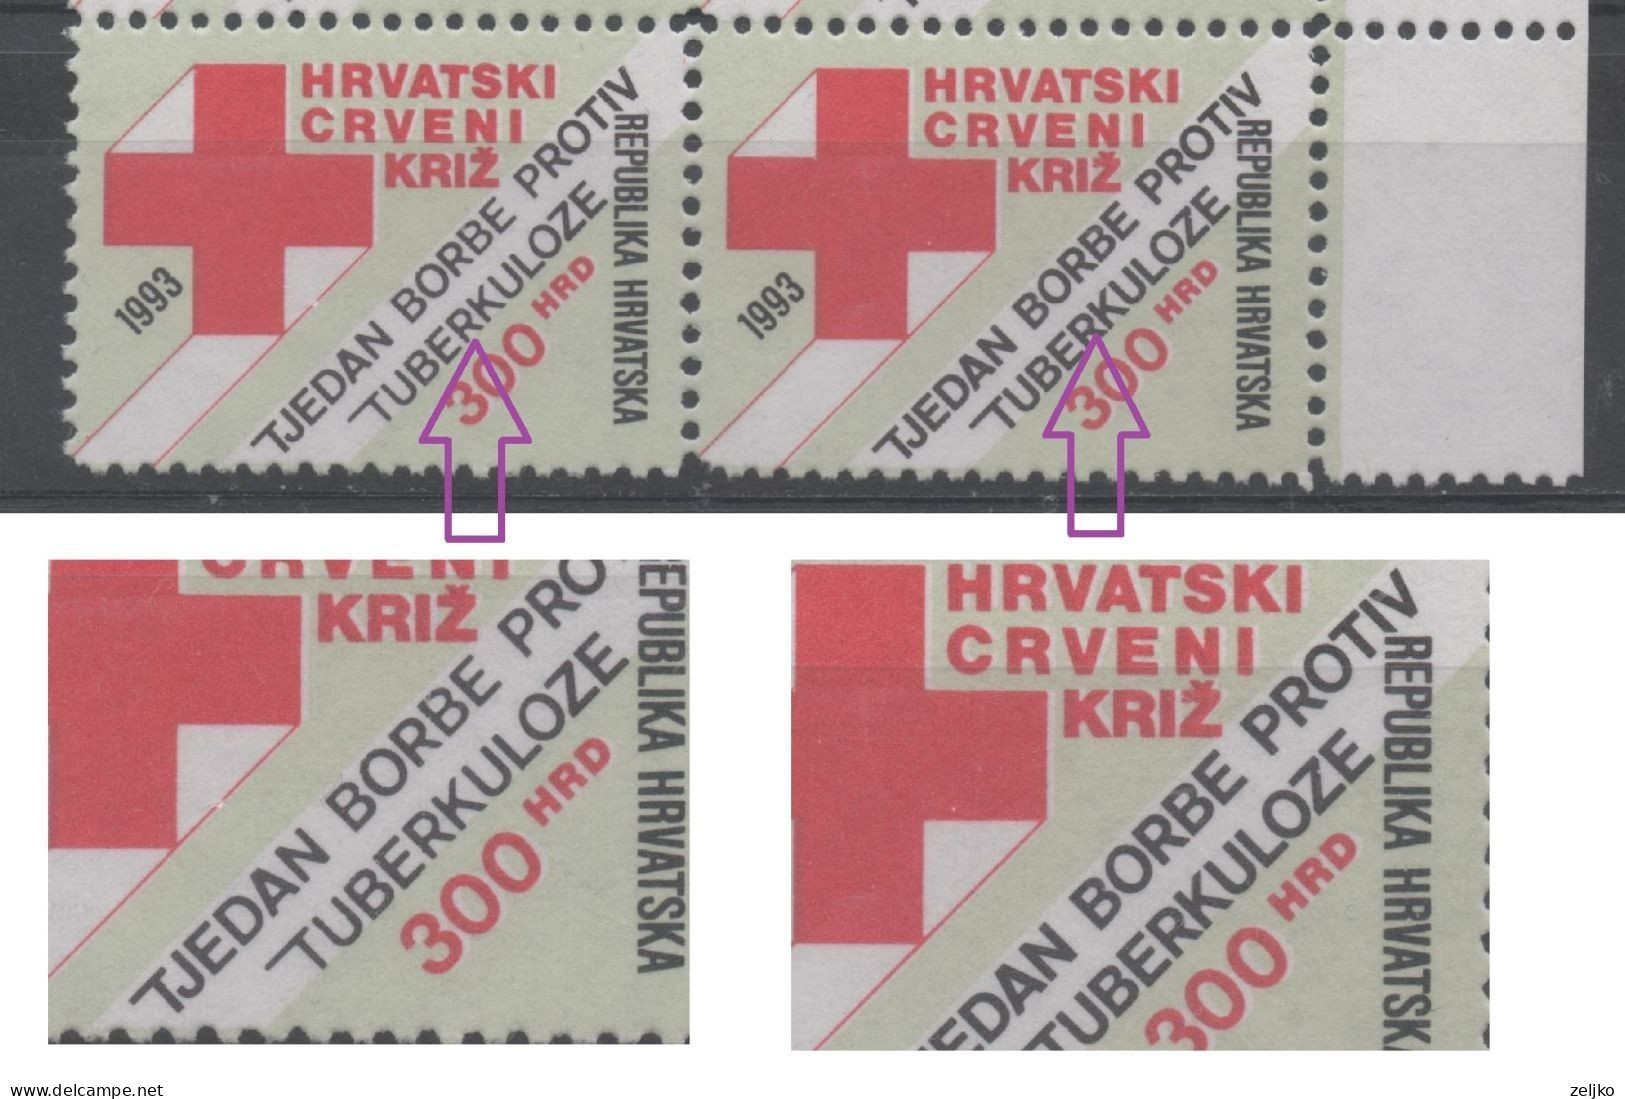 Croatia, Error, 1993, MNH, Michel 30, Difference In Thickness Of The Inscription, Red Cross - Croazia